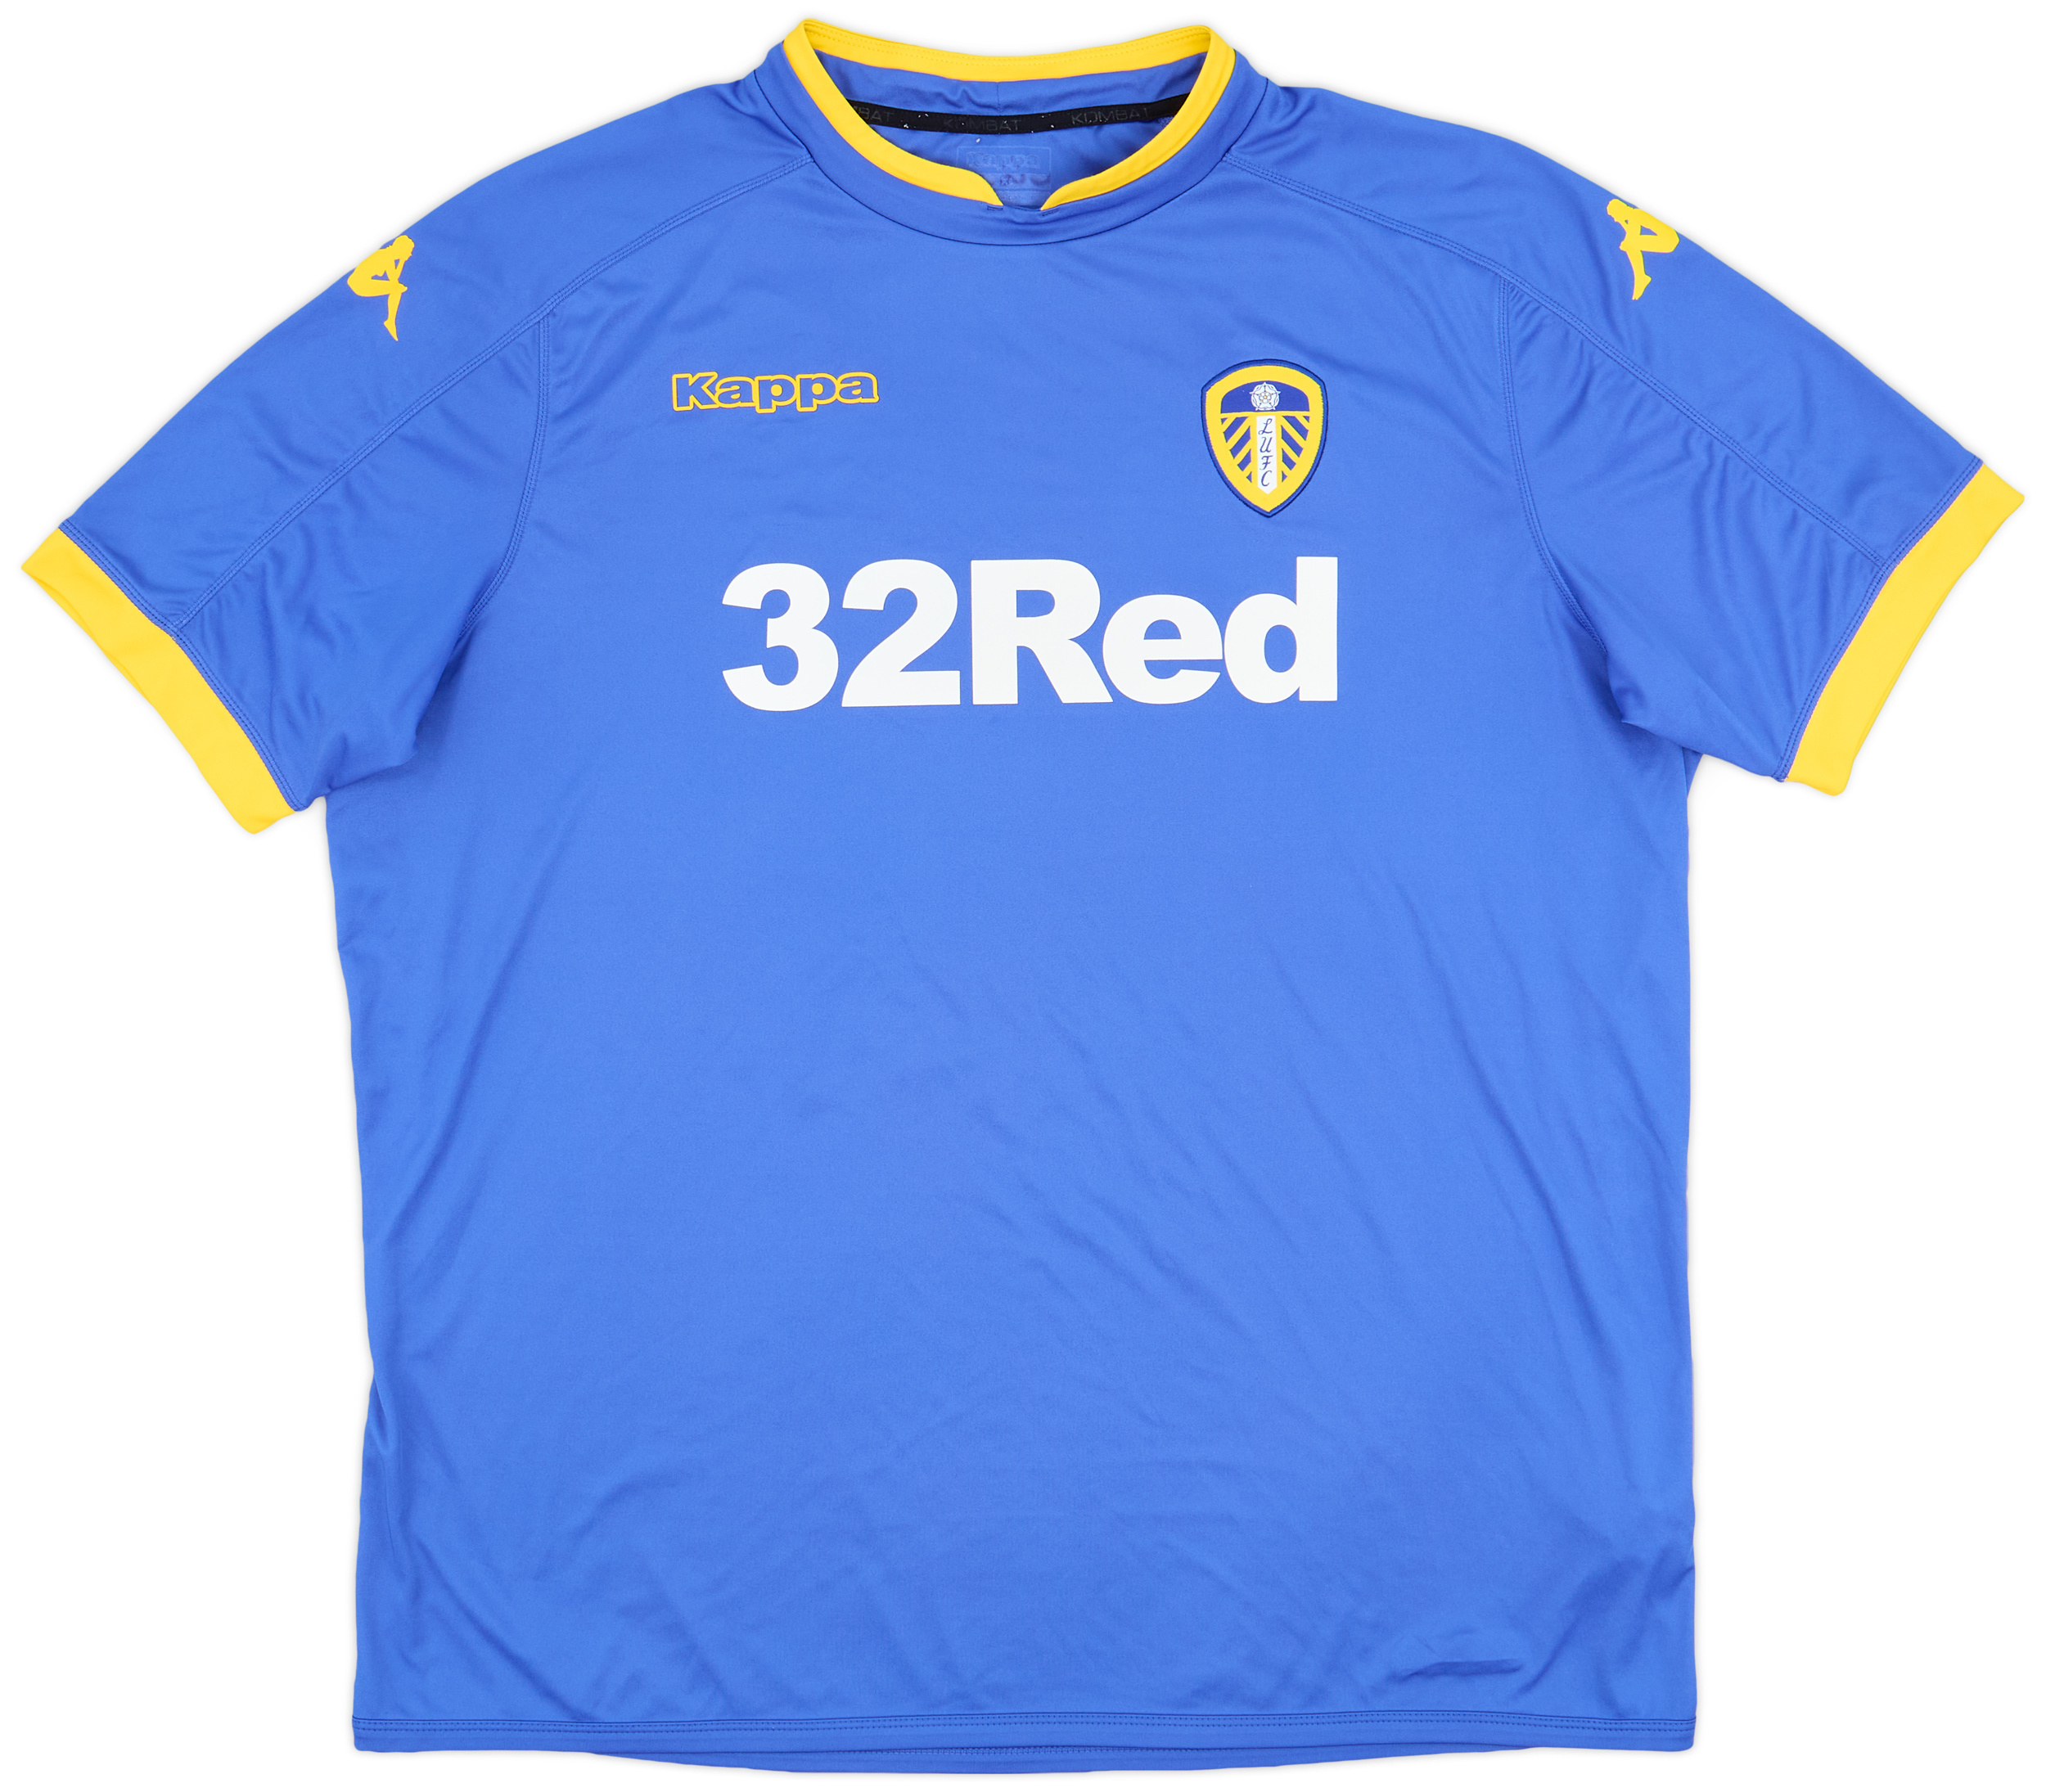 2016-17 Leeds United Away Shirt - 9/10 - ()